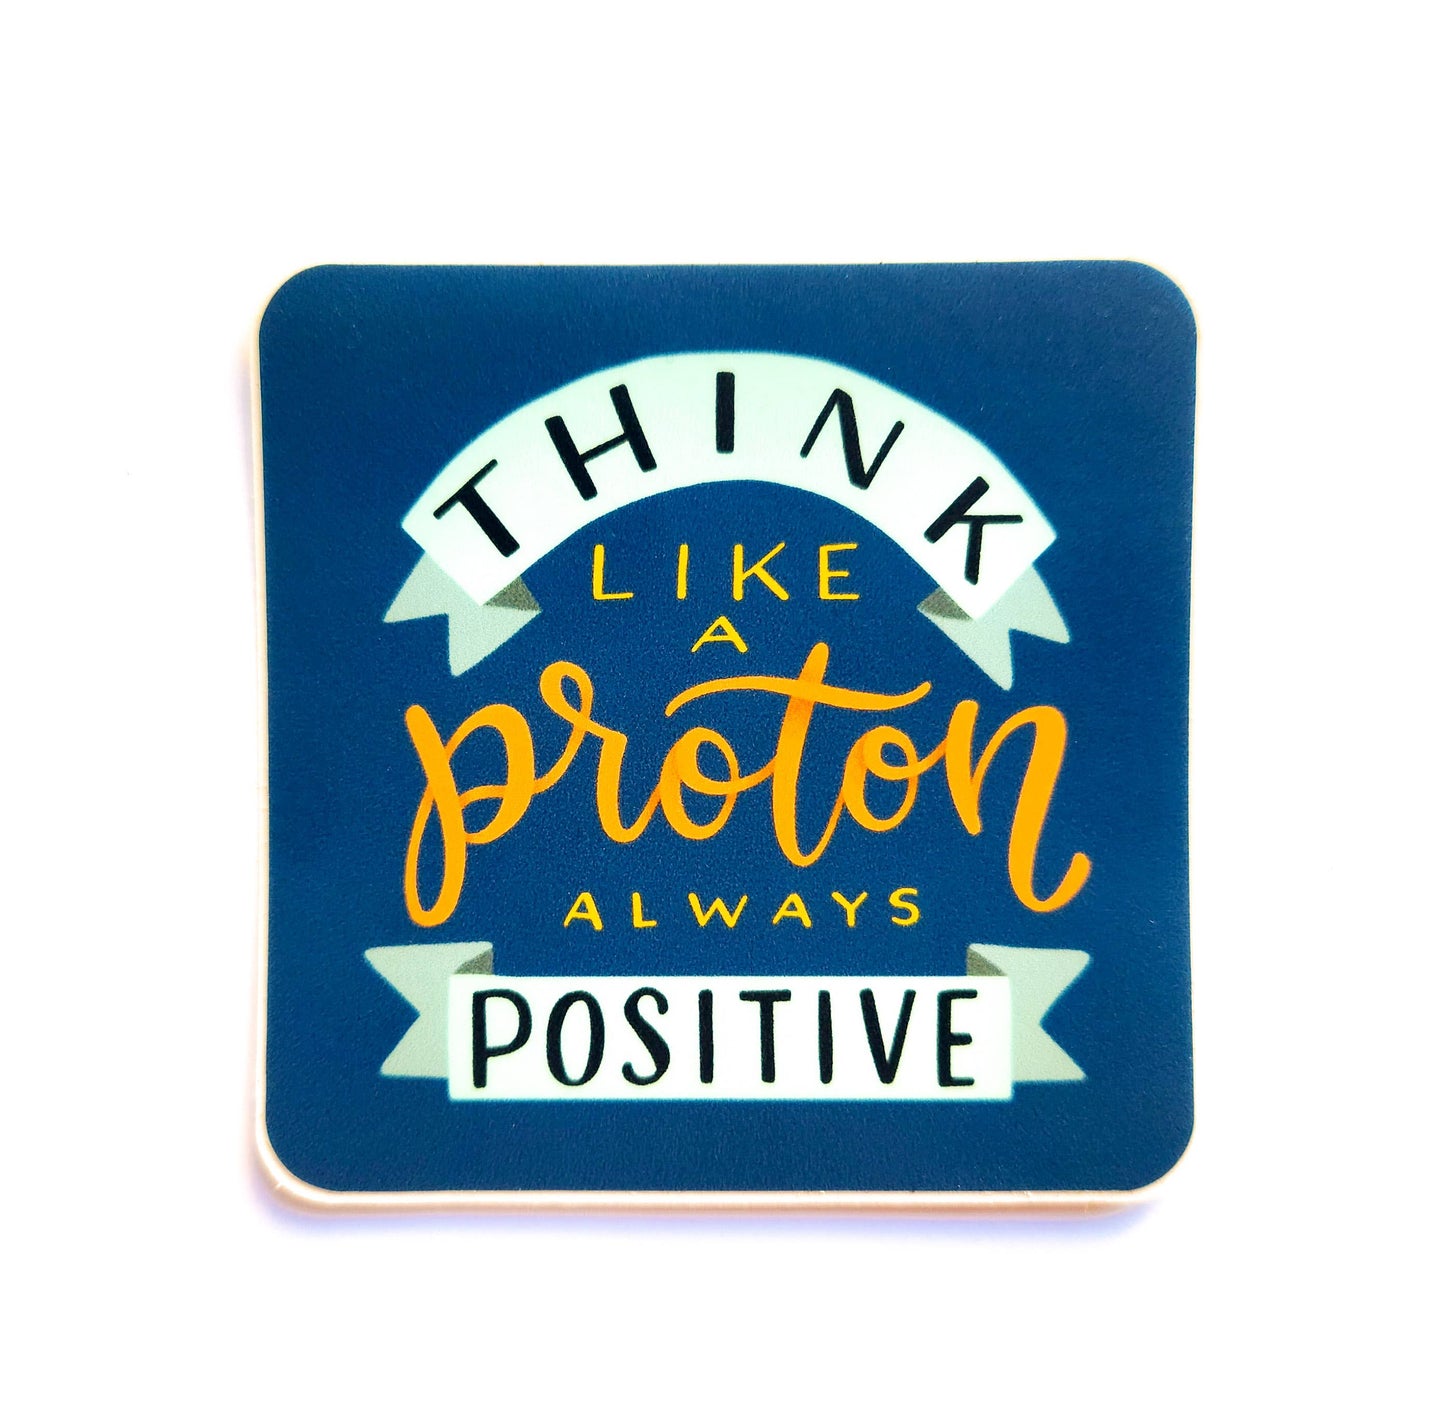 Think Like a Proton - Science Pun Sticker